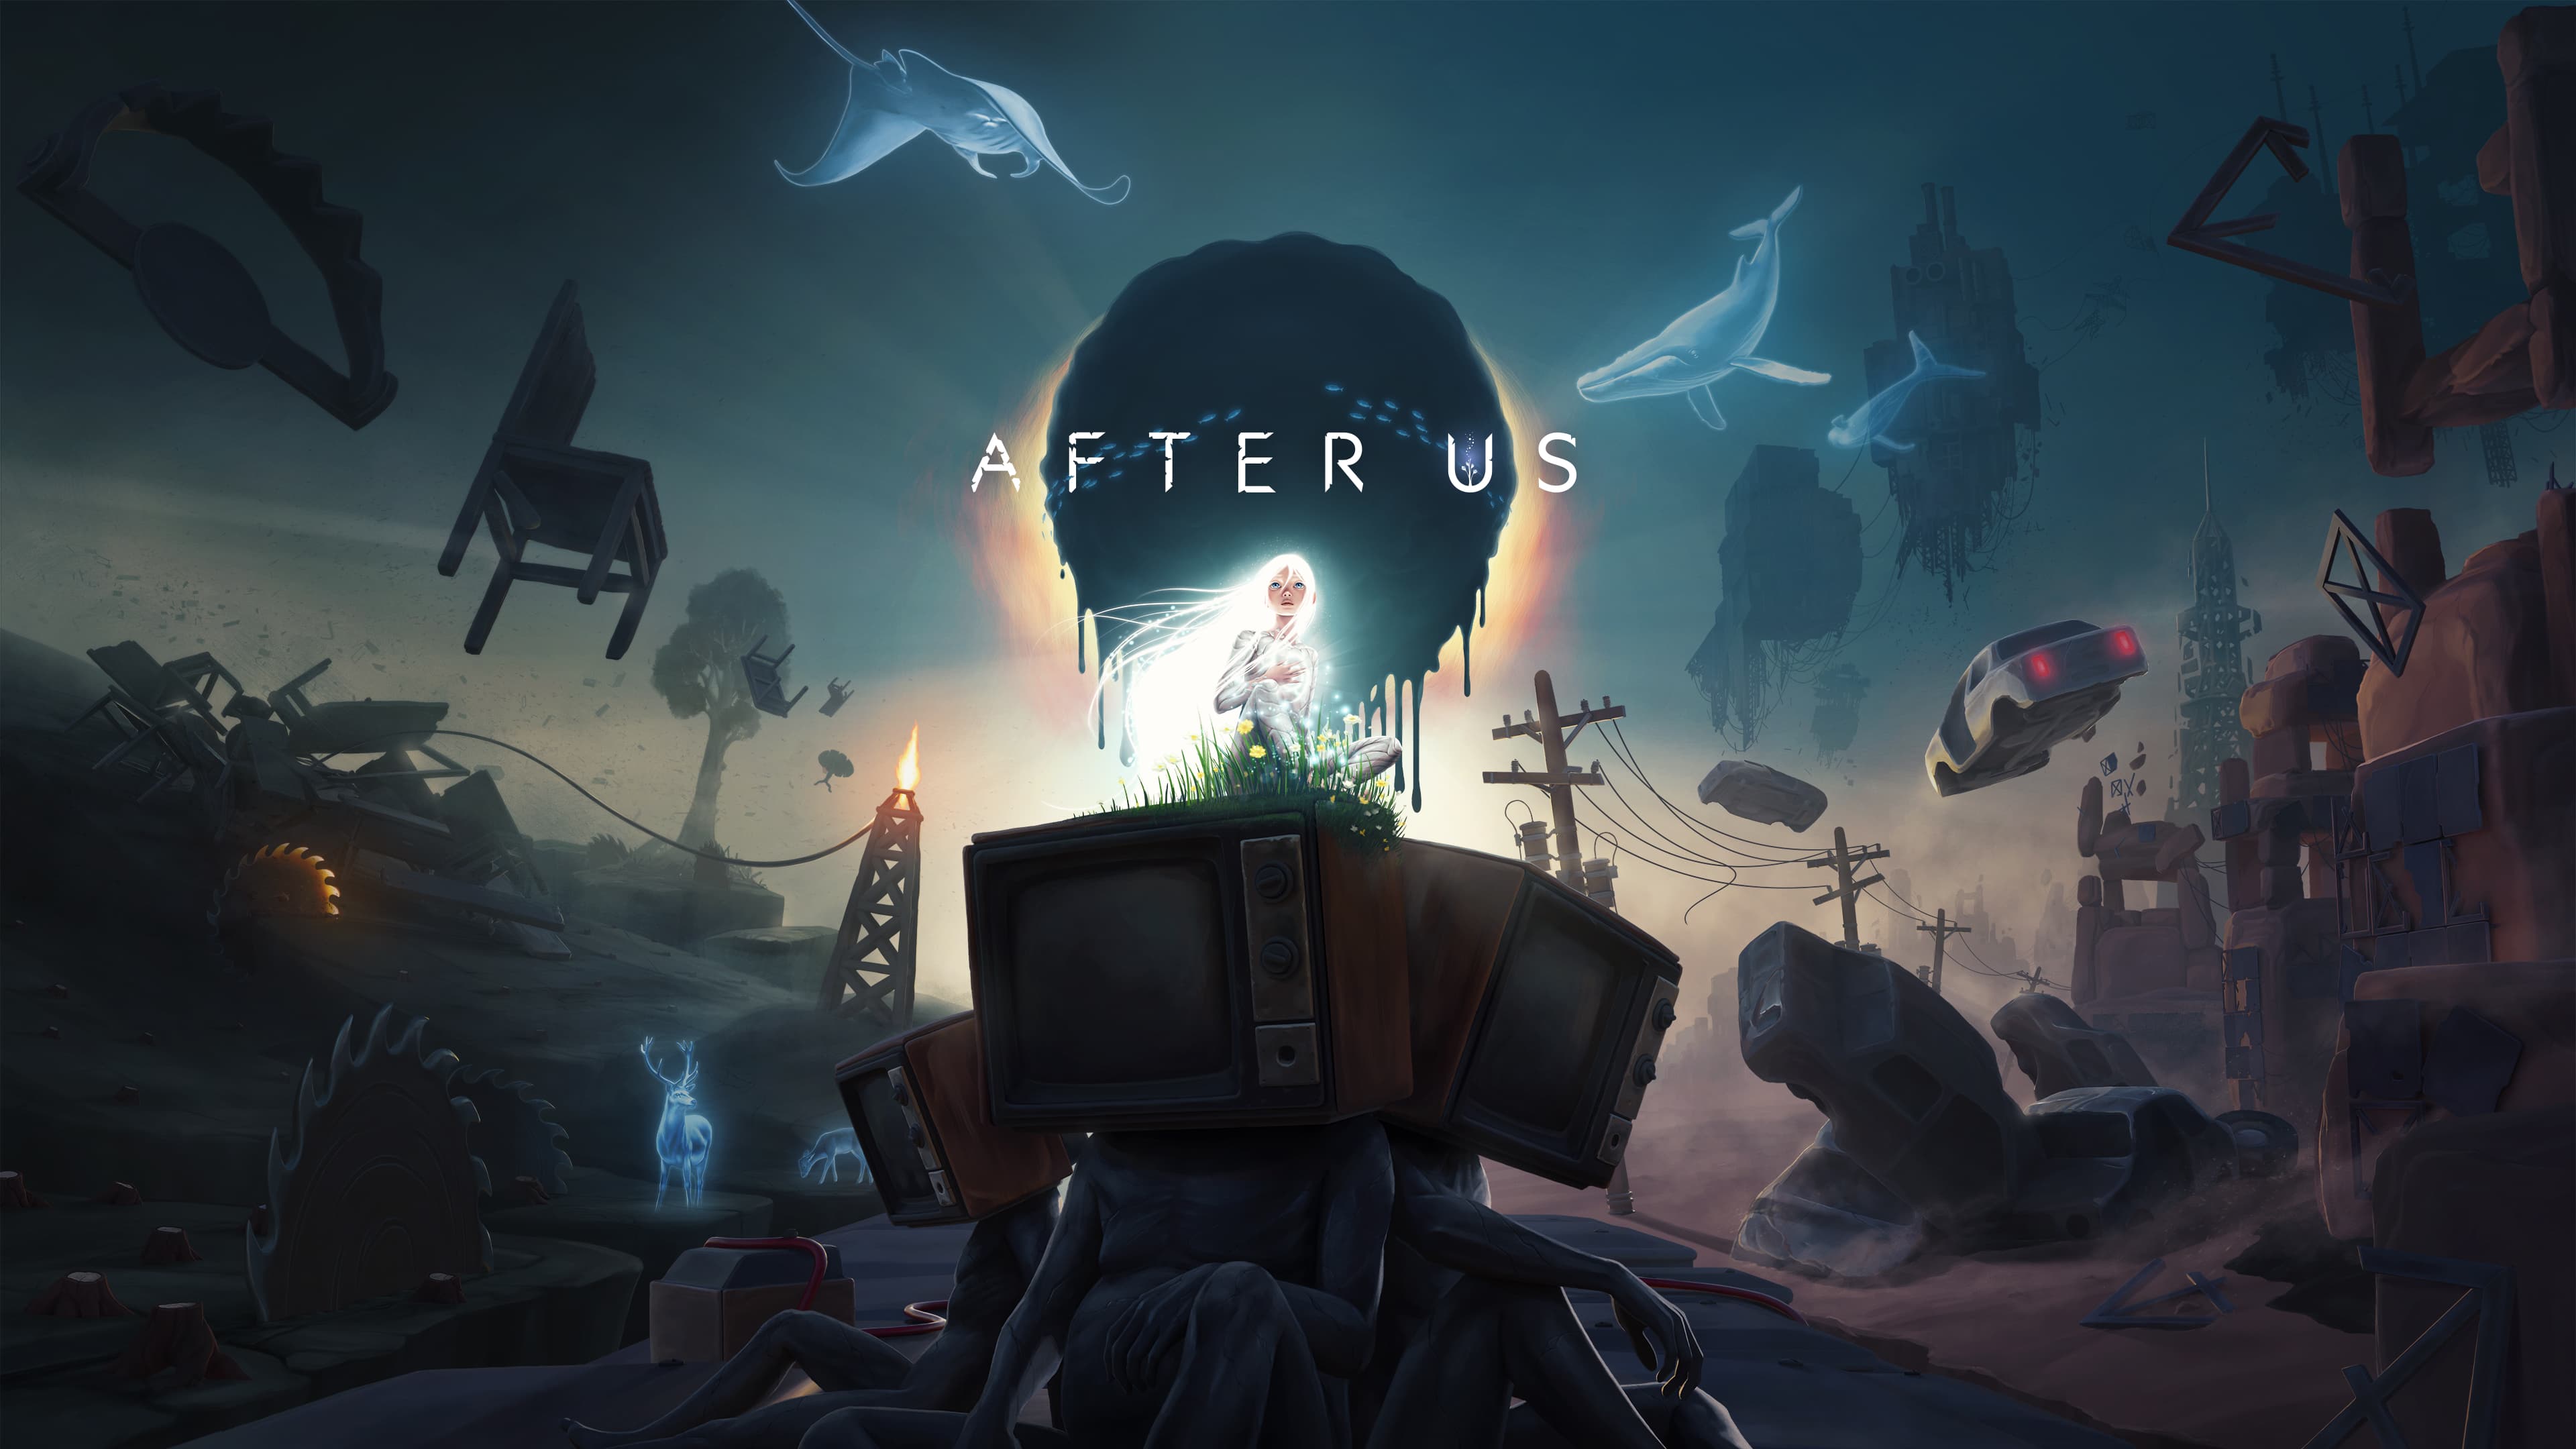 《After Us》現已於獲准上市區域的PC、PlayStation 5和Xbox Series X